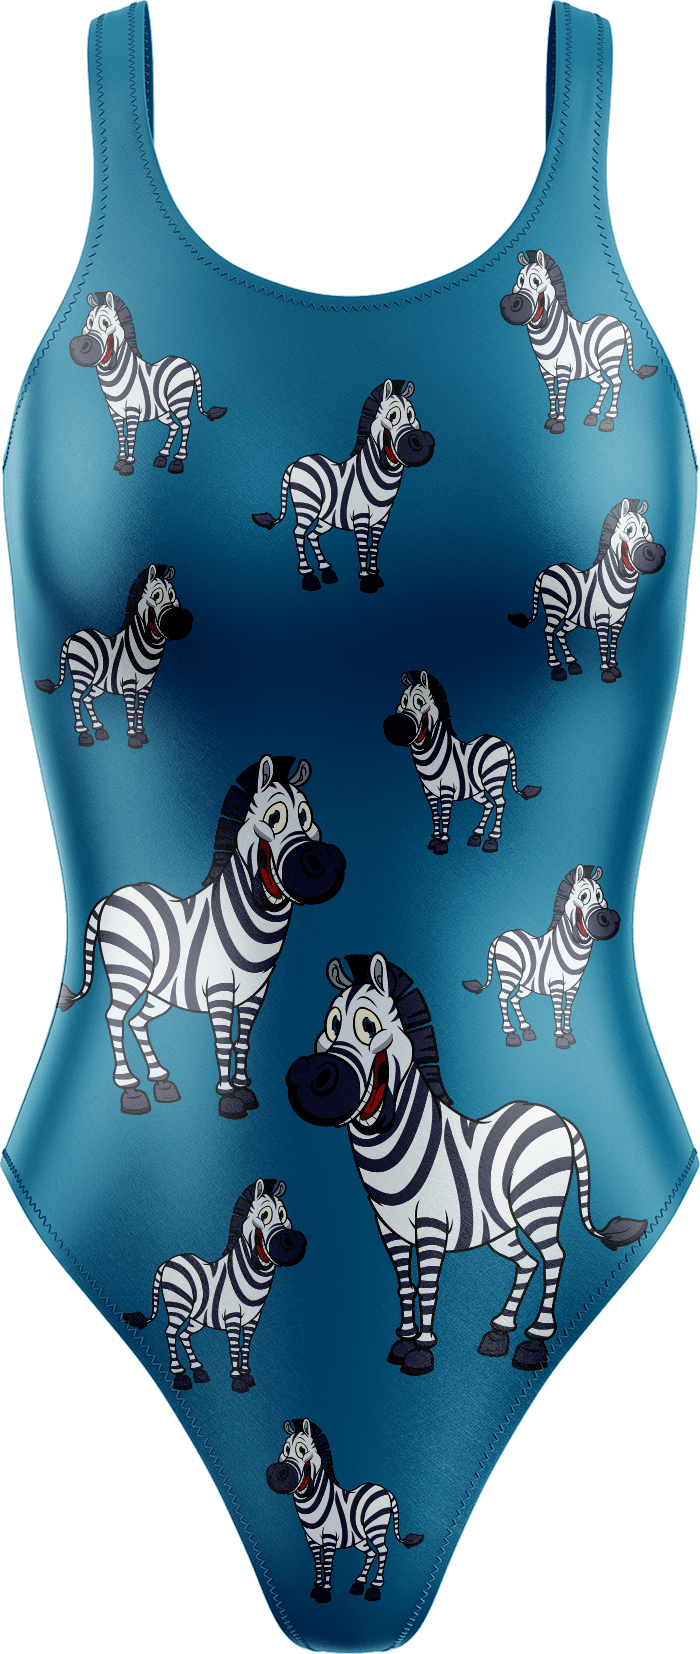 Ziva Zebra Swimsuits - fungear.com.au